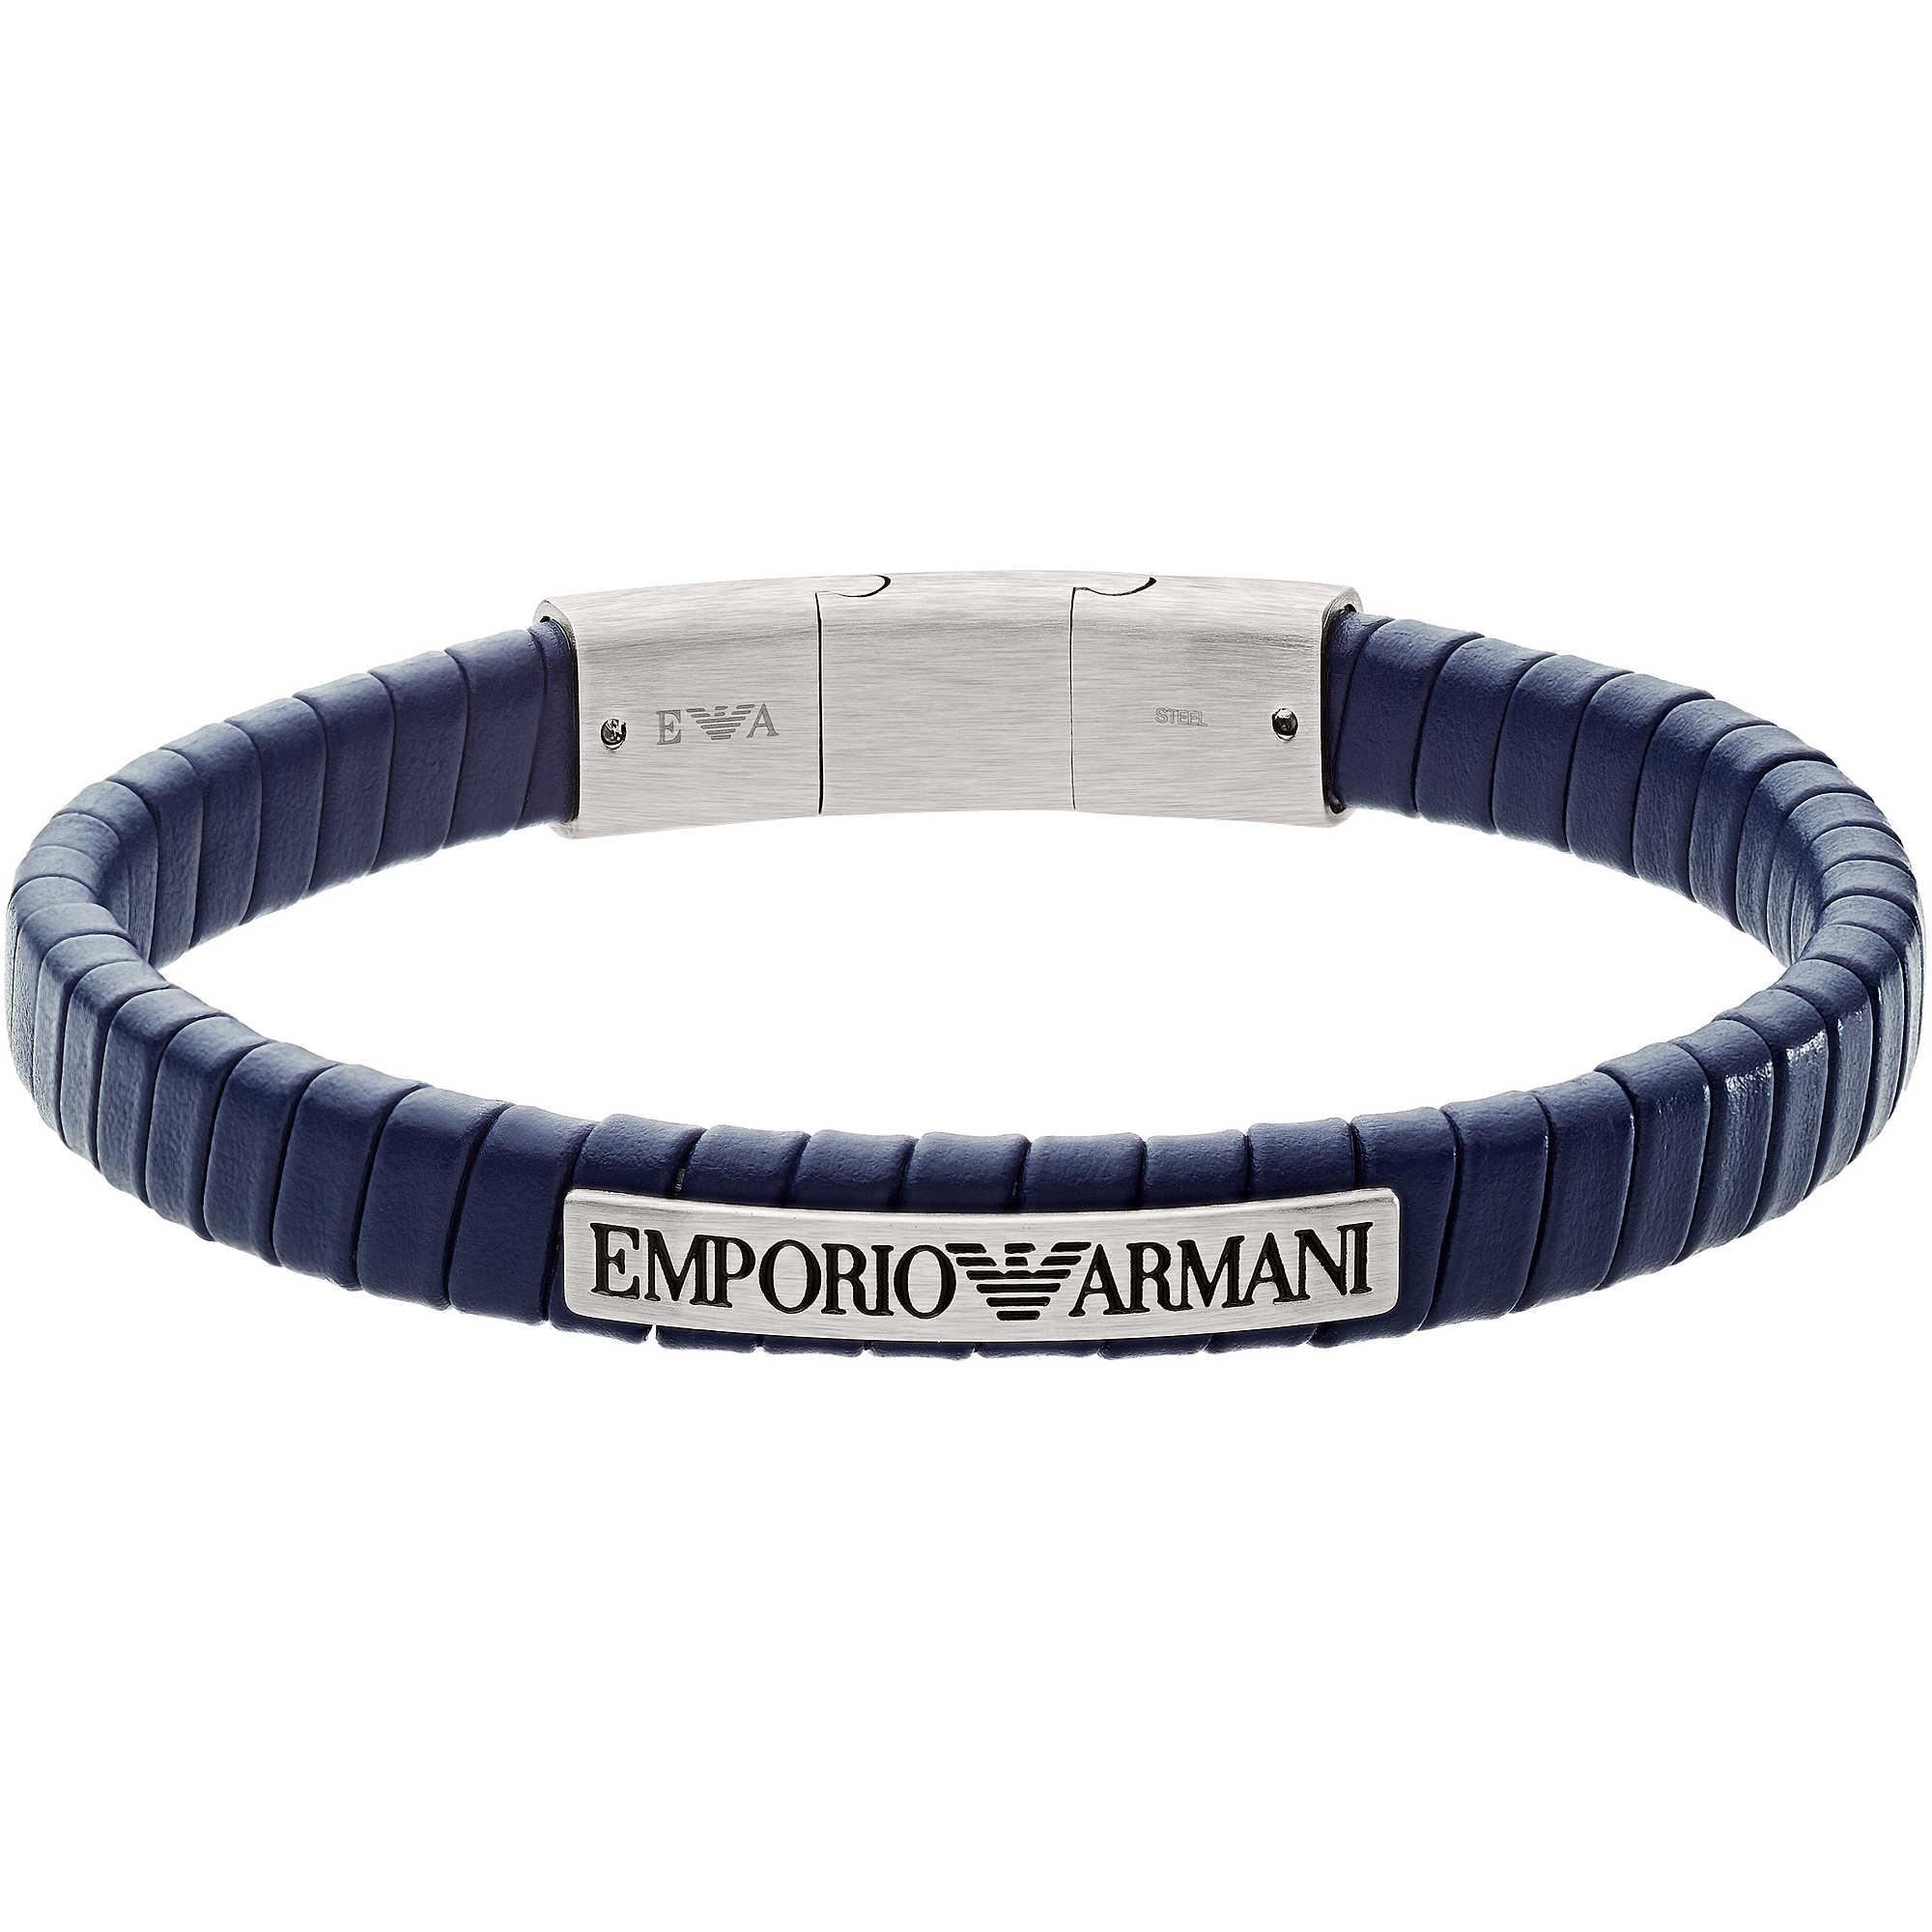 GetUSCart- Emporio Armani Men's Blue Nylon Strap Bracelet (Model:  EGS2866040), One Size